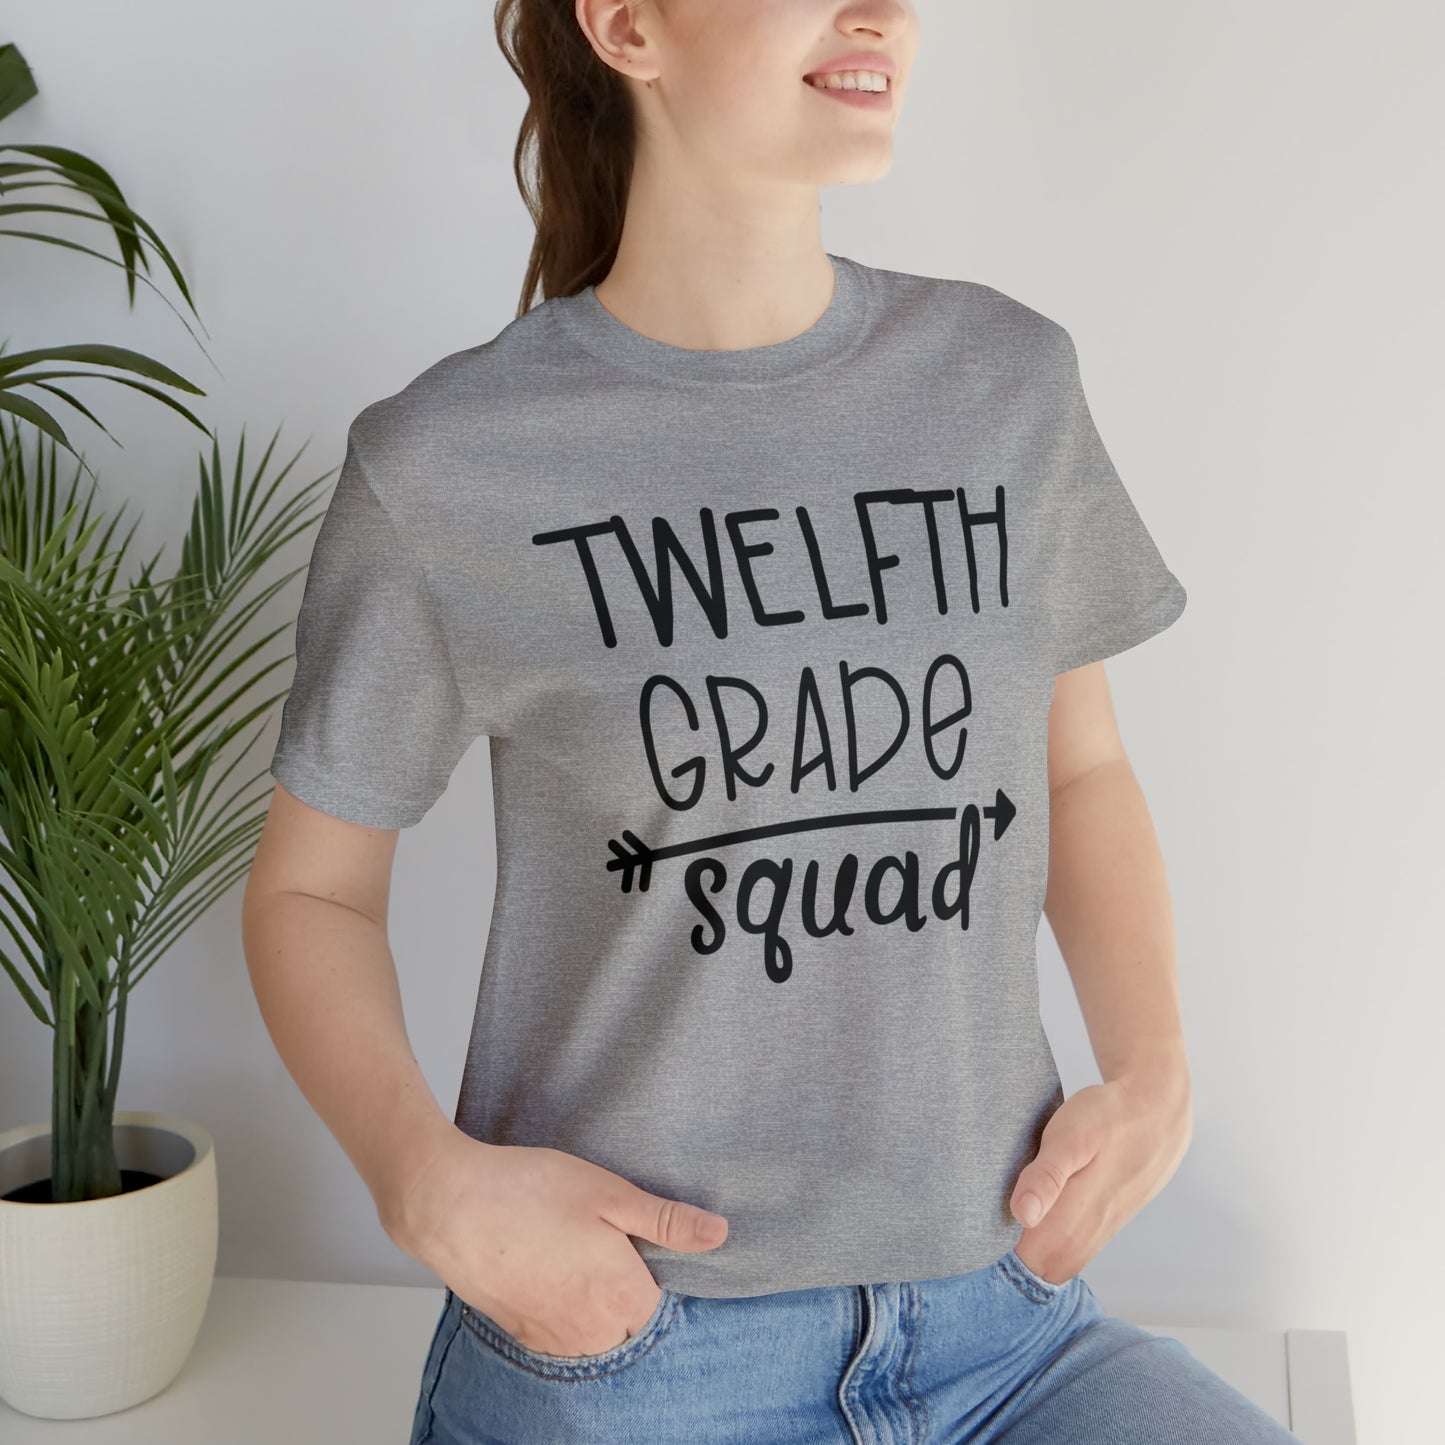 Twelfth Grade Squad Tee